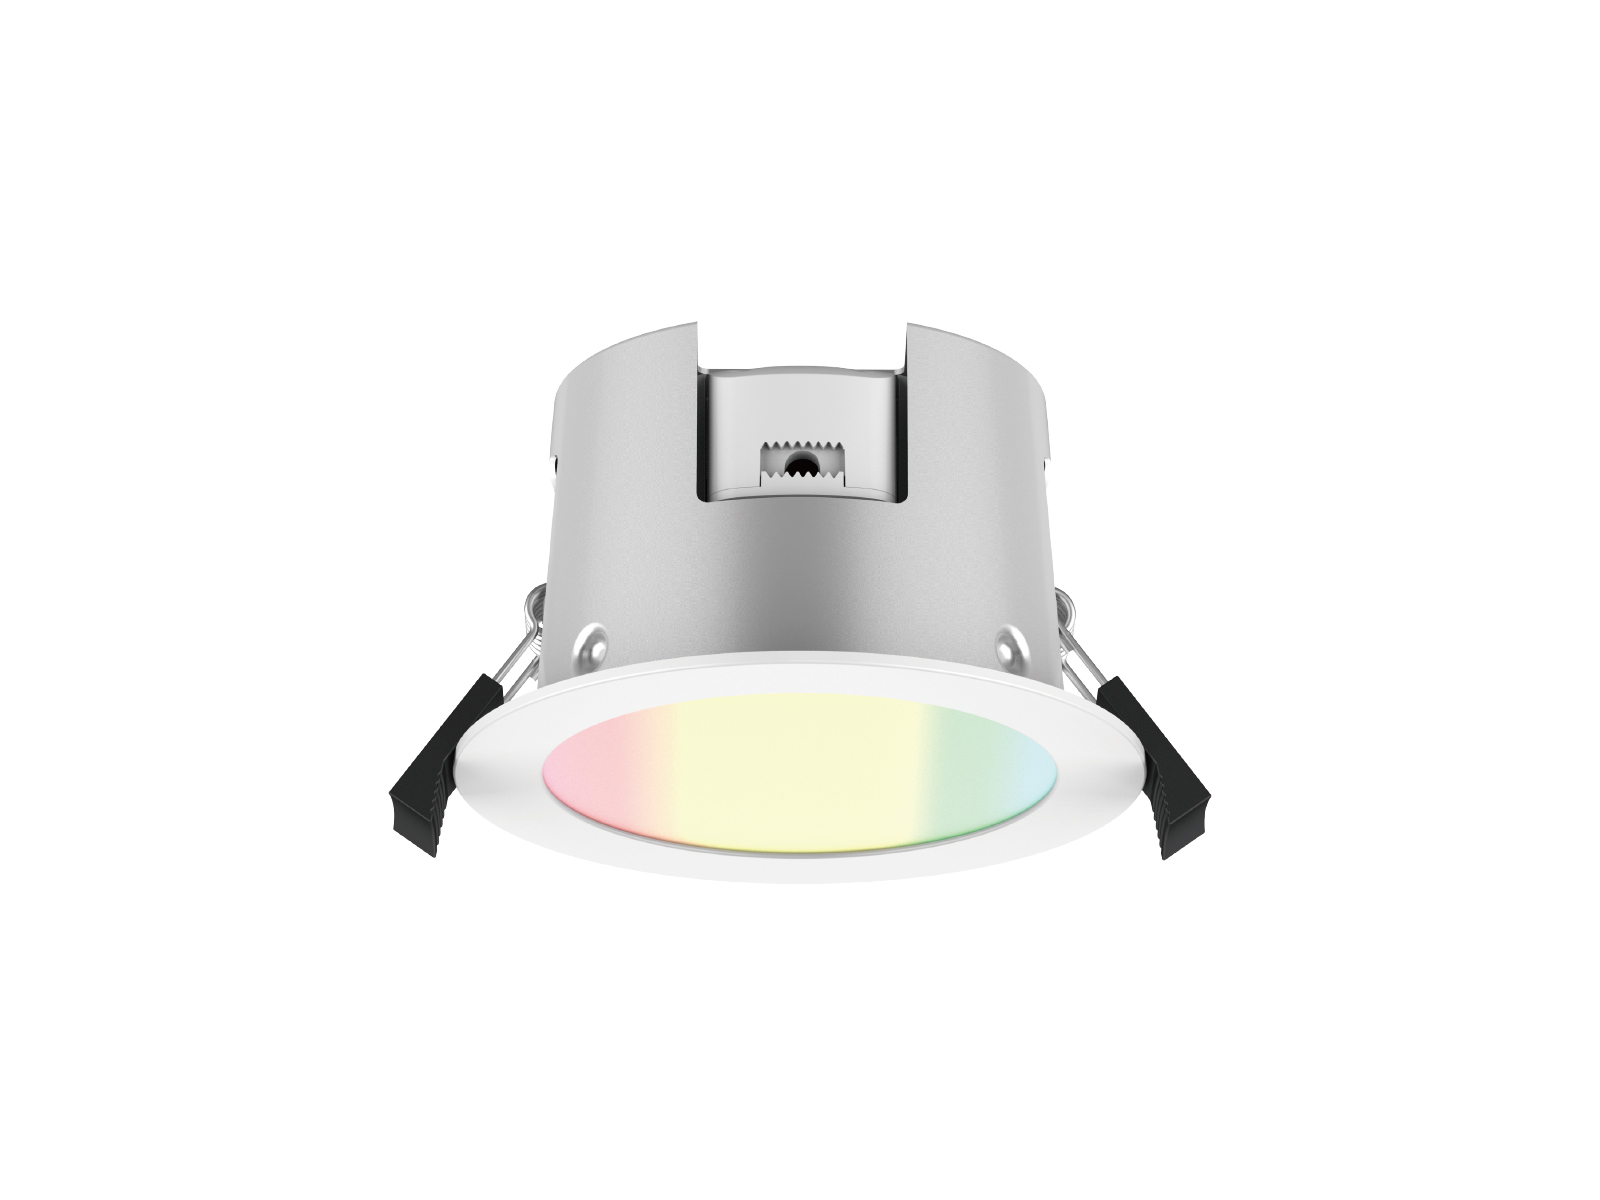 DL143-W3/B3 IP54 Adjustable CCT Ceiling Downlight